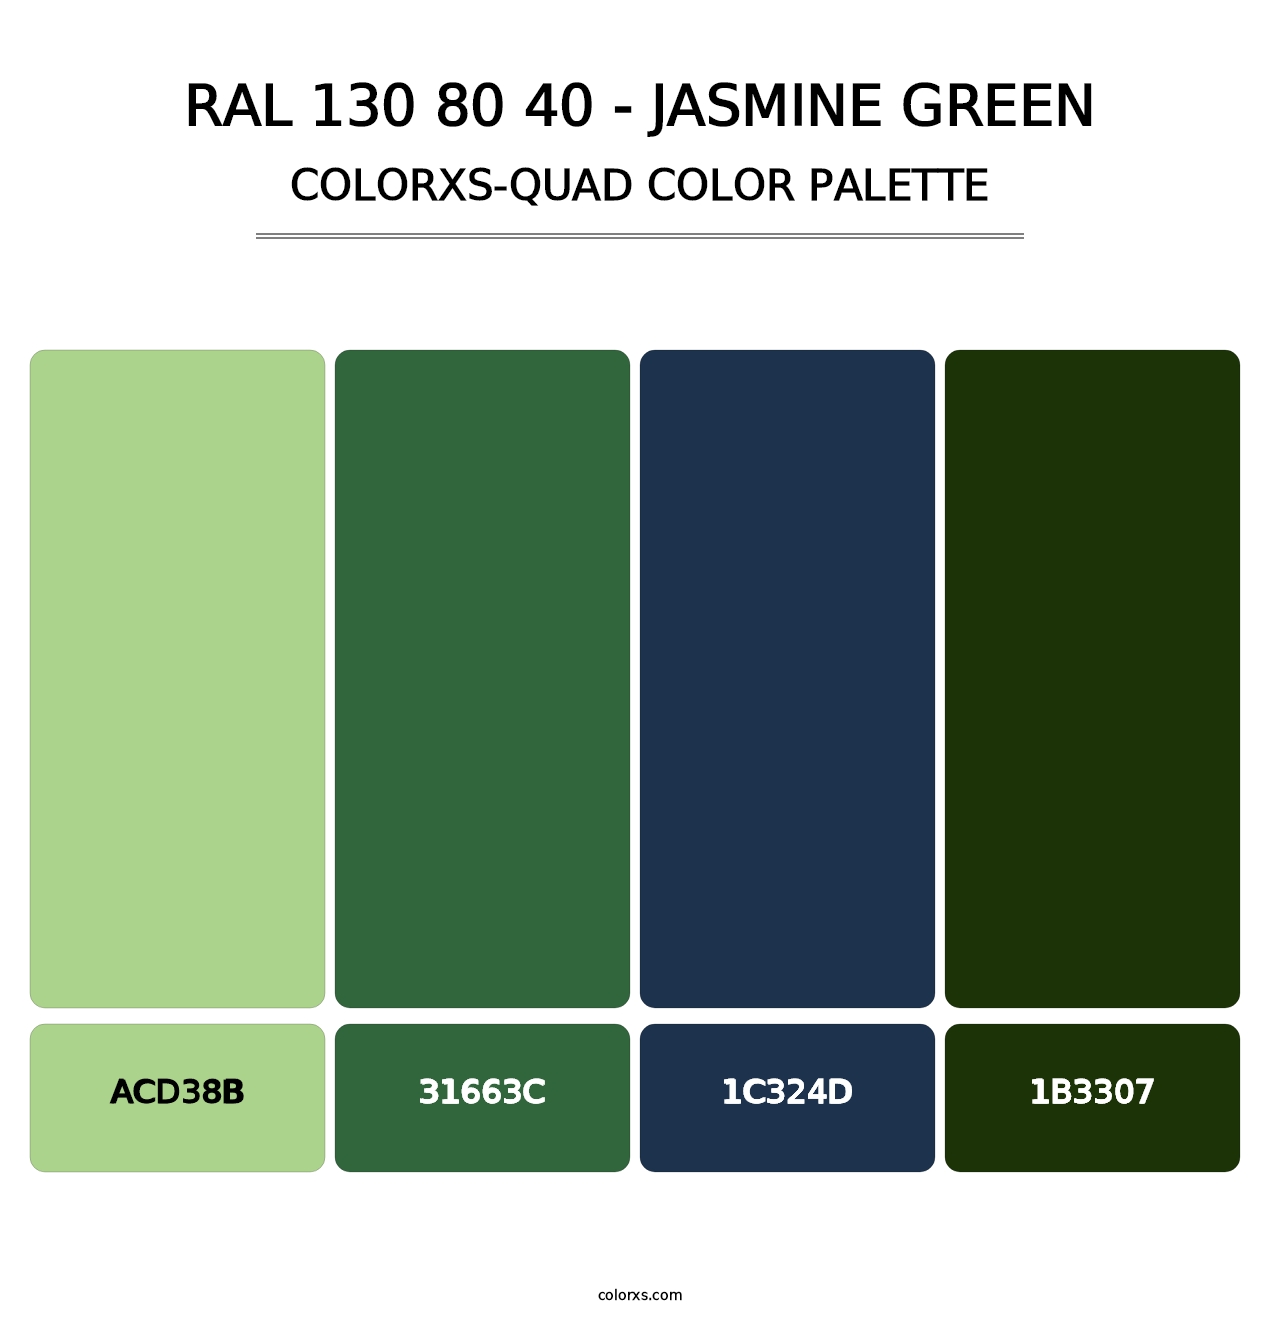 RAL 130 80 40 - Jasmine Green - Colorxs Quad Palette